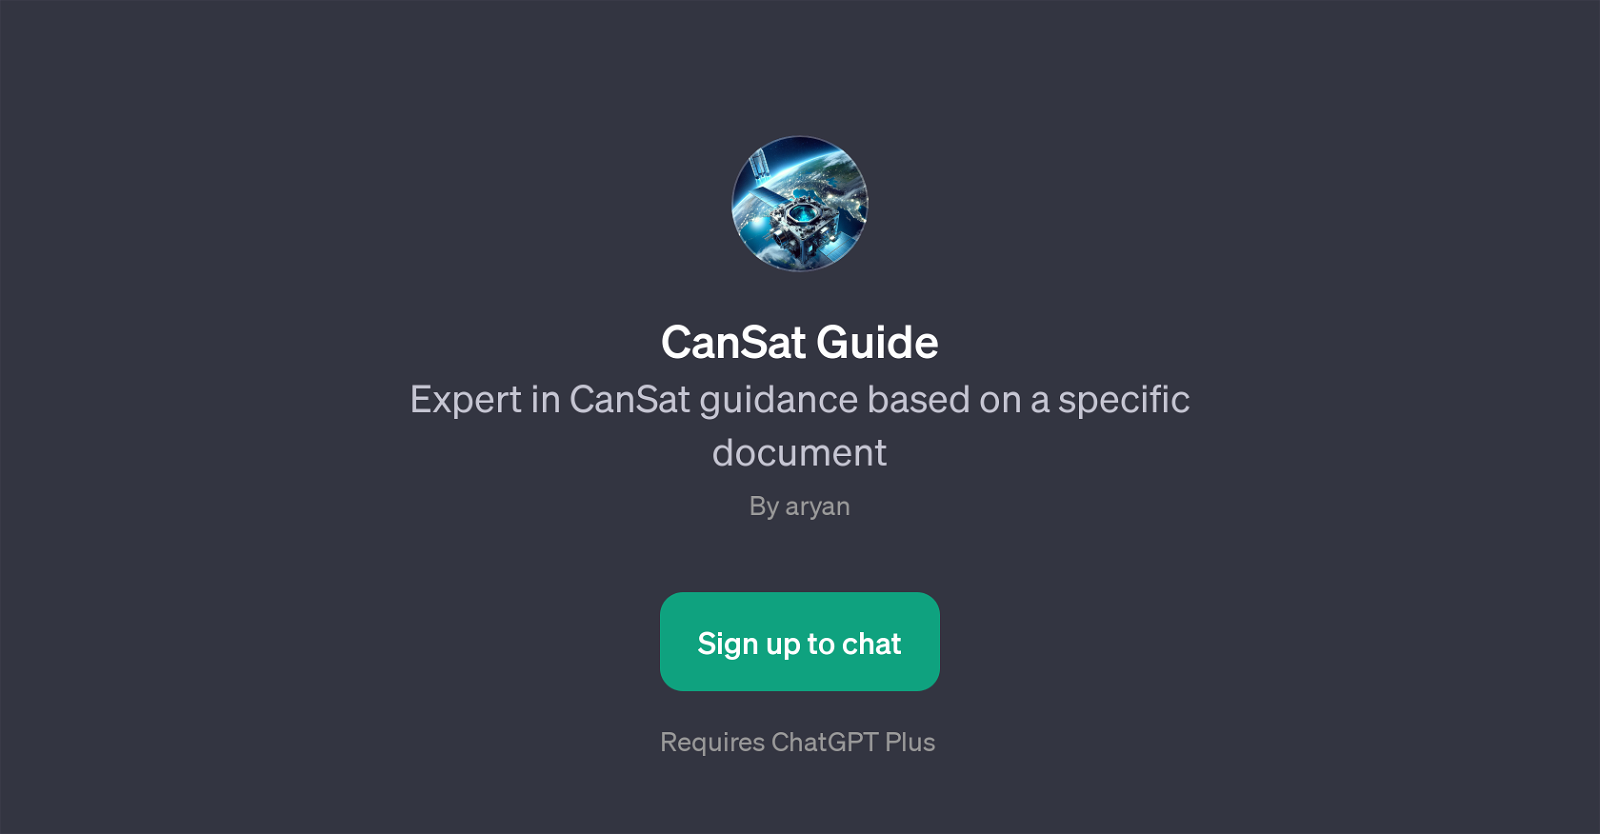 CanSat Guide website